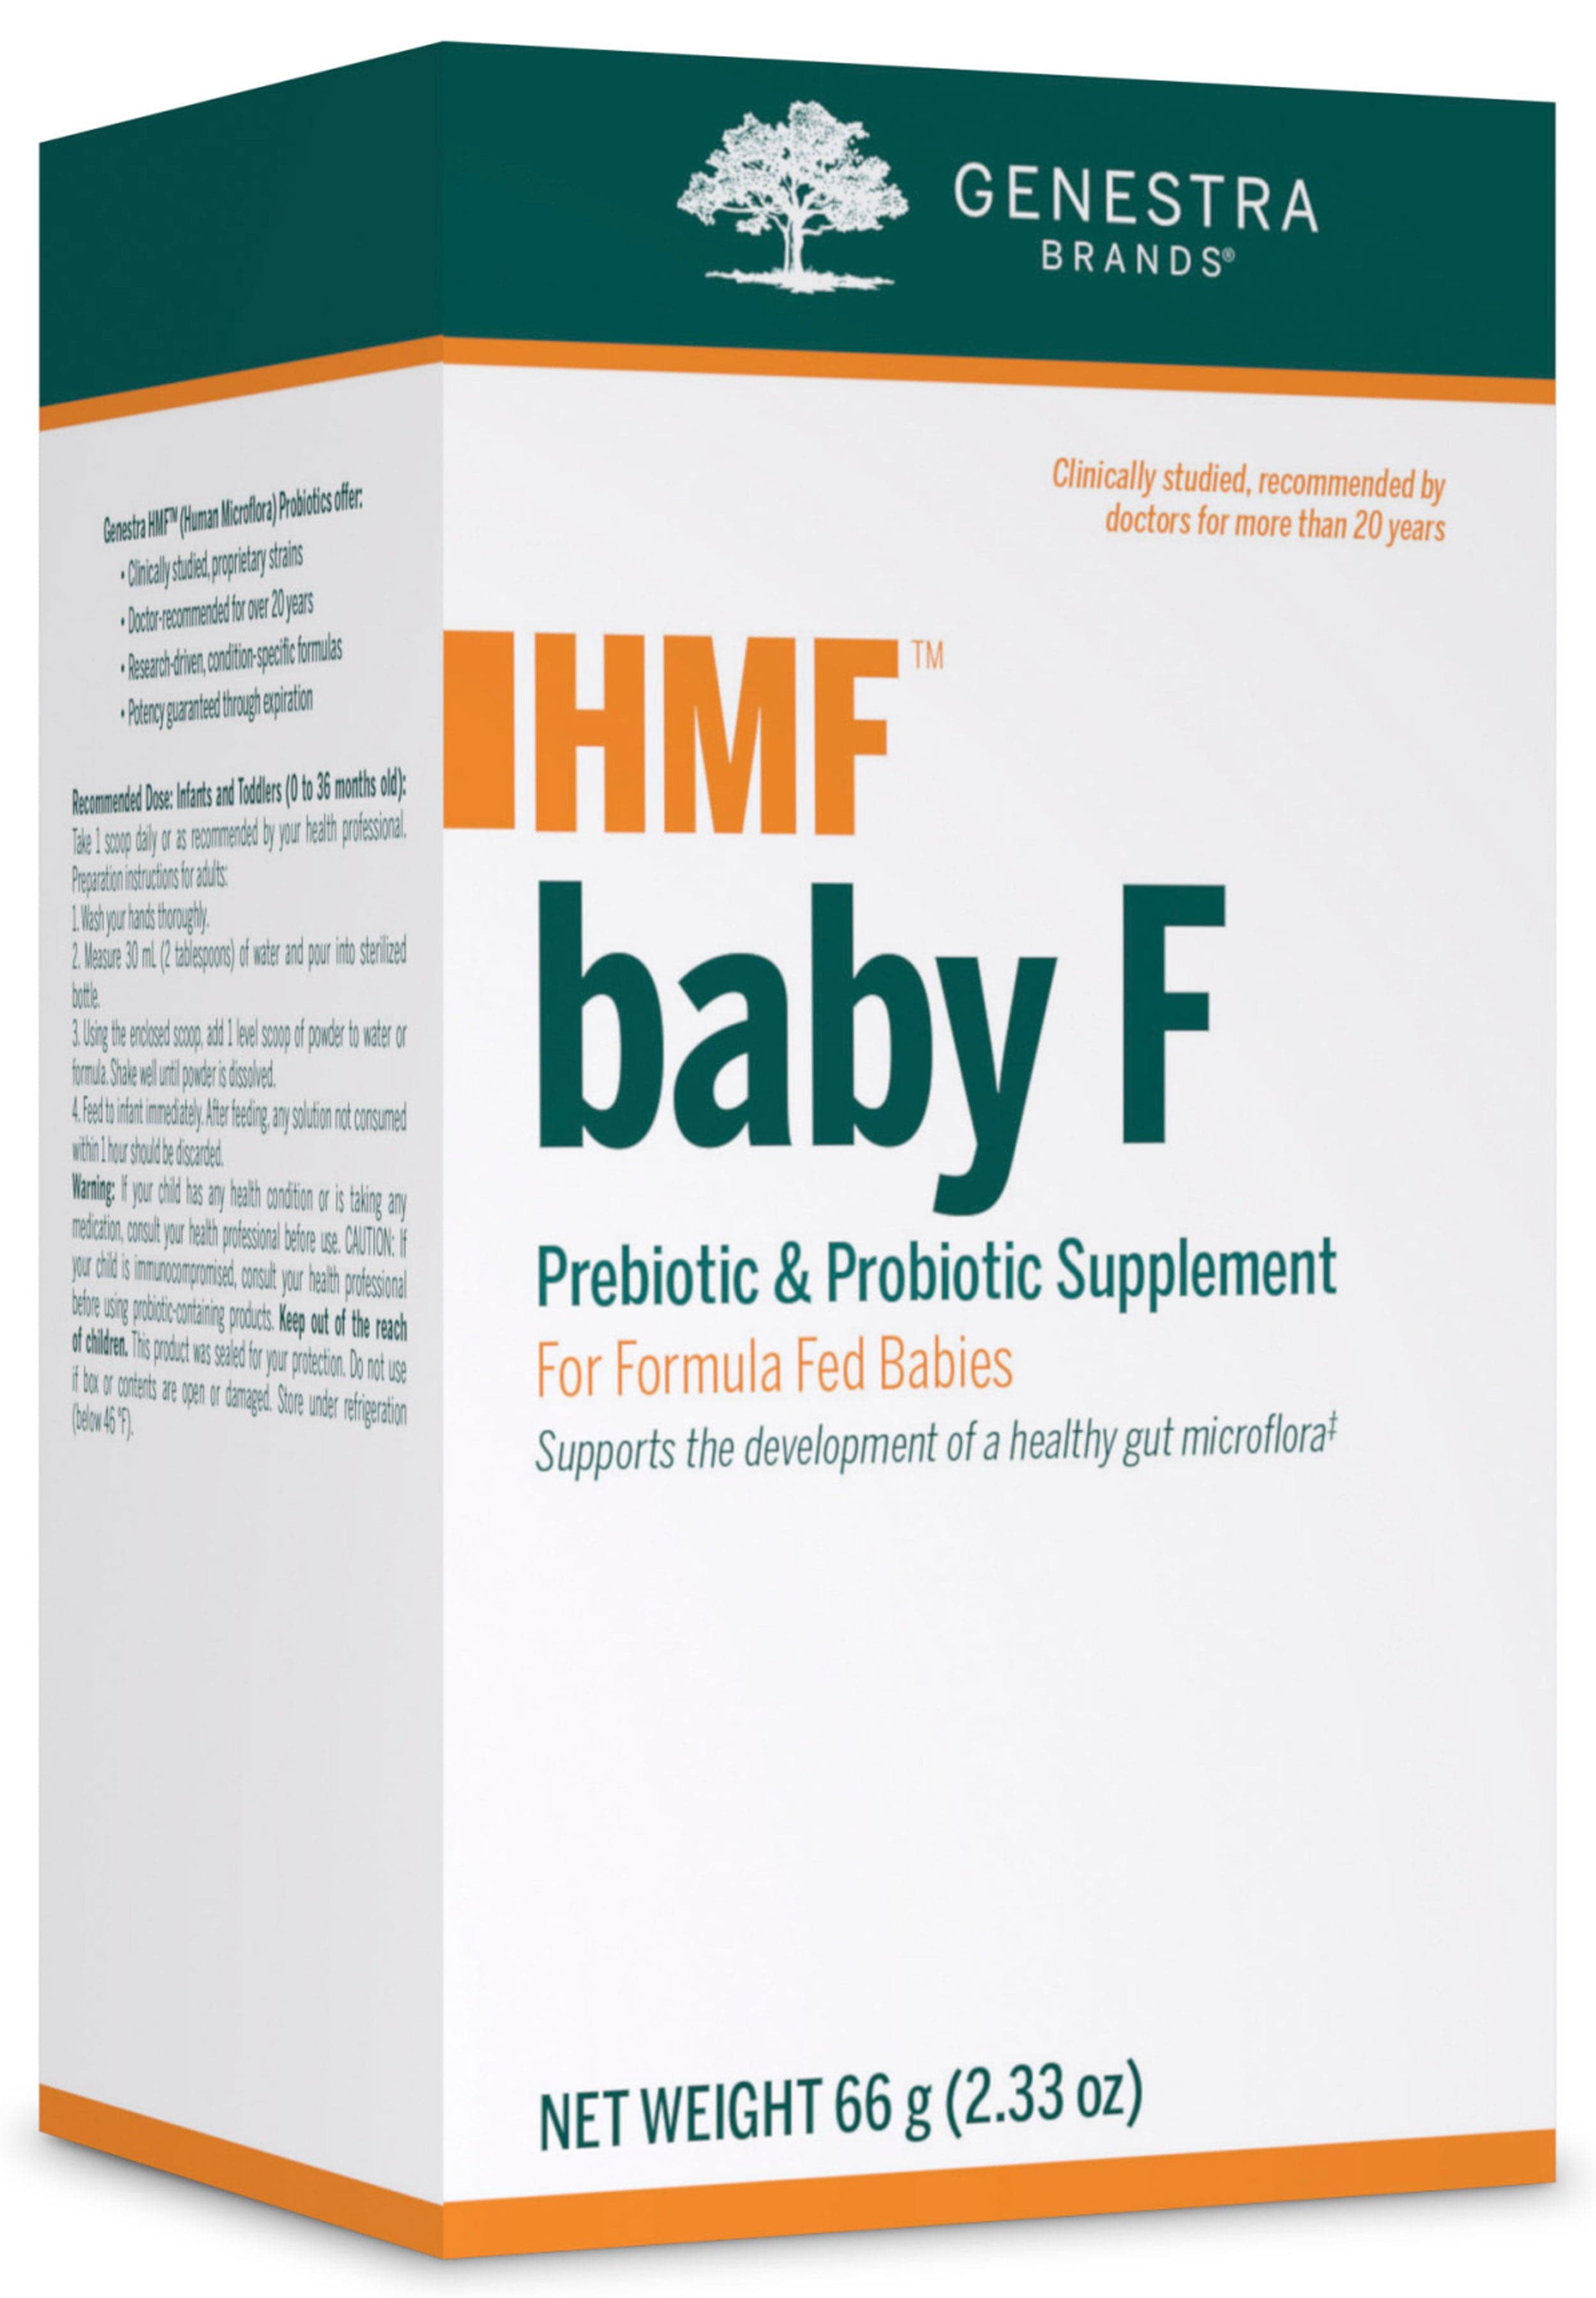 Genestra Brands HMF Baby F